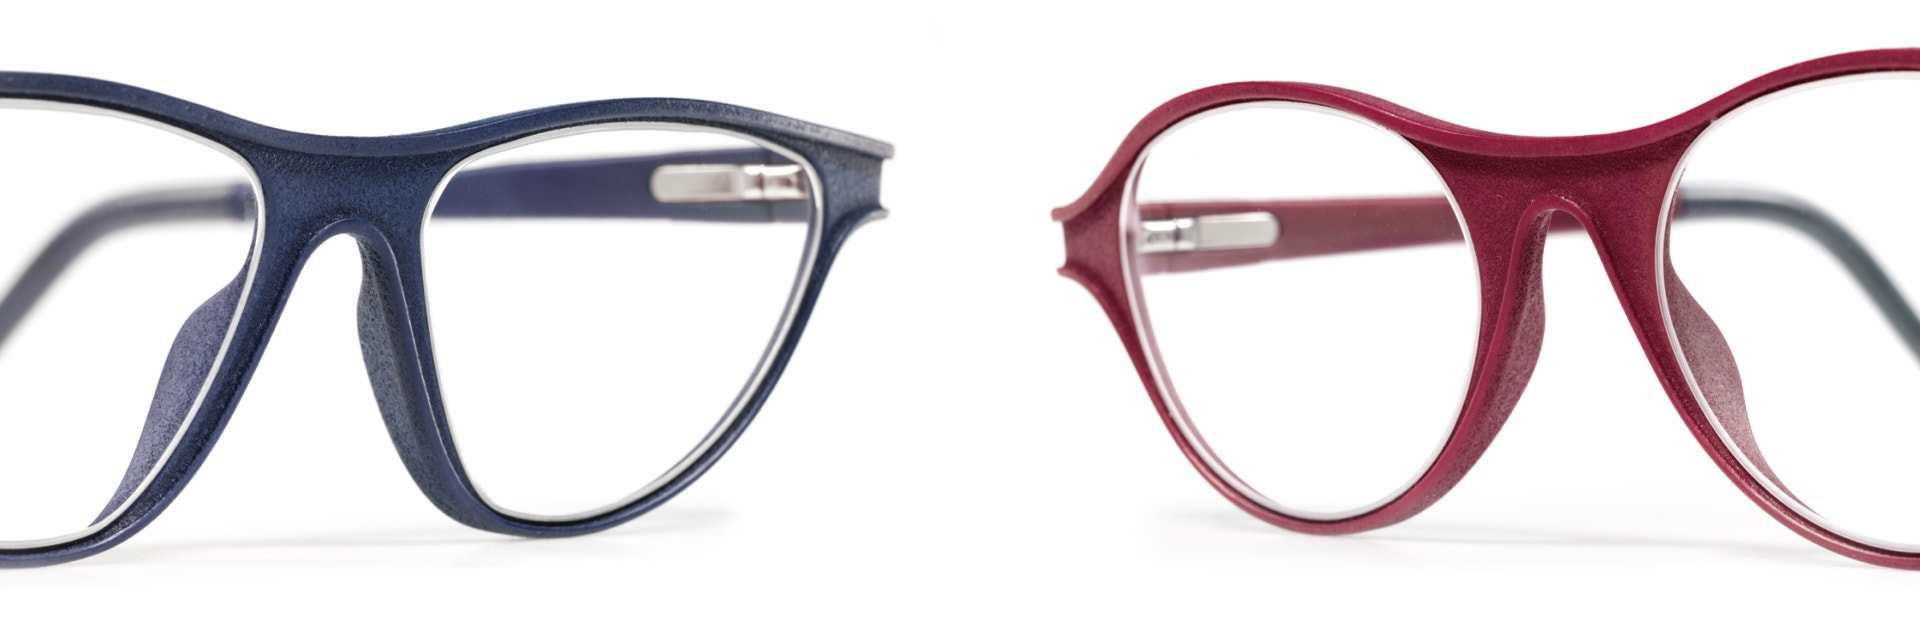 Due montature per occhiali stampate in 3D con finitura Luxura, una in blu jeans e una in rosso lampone